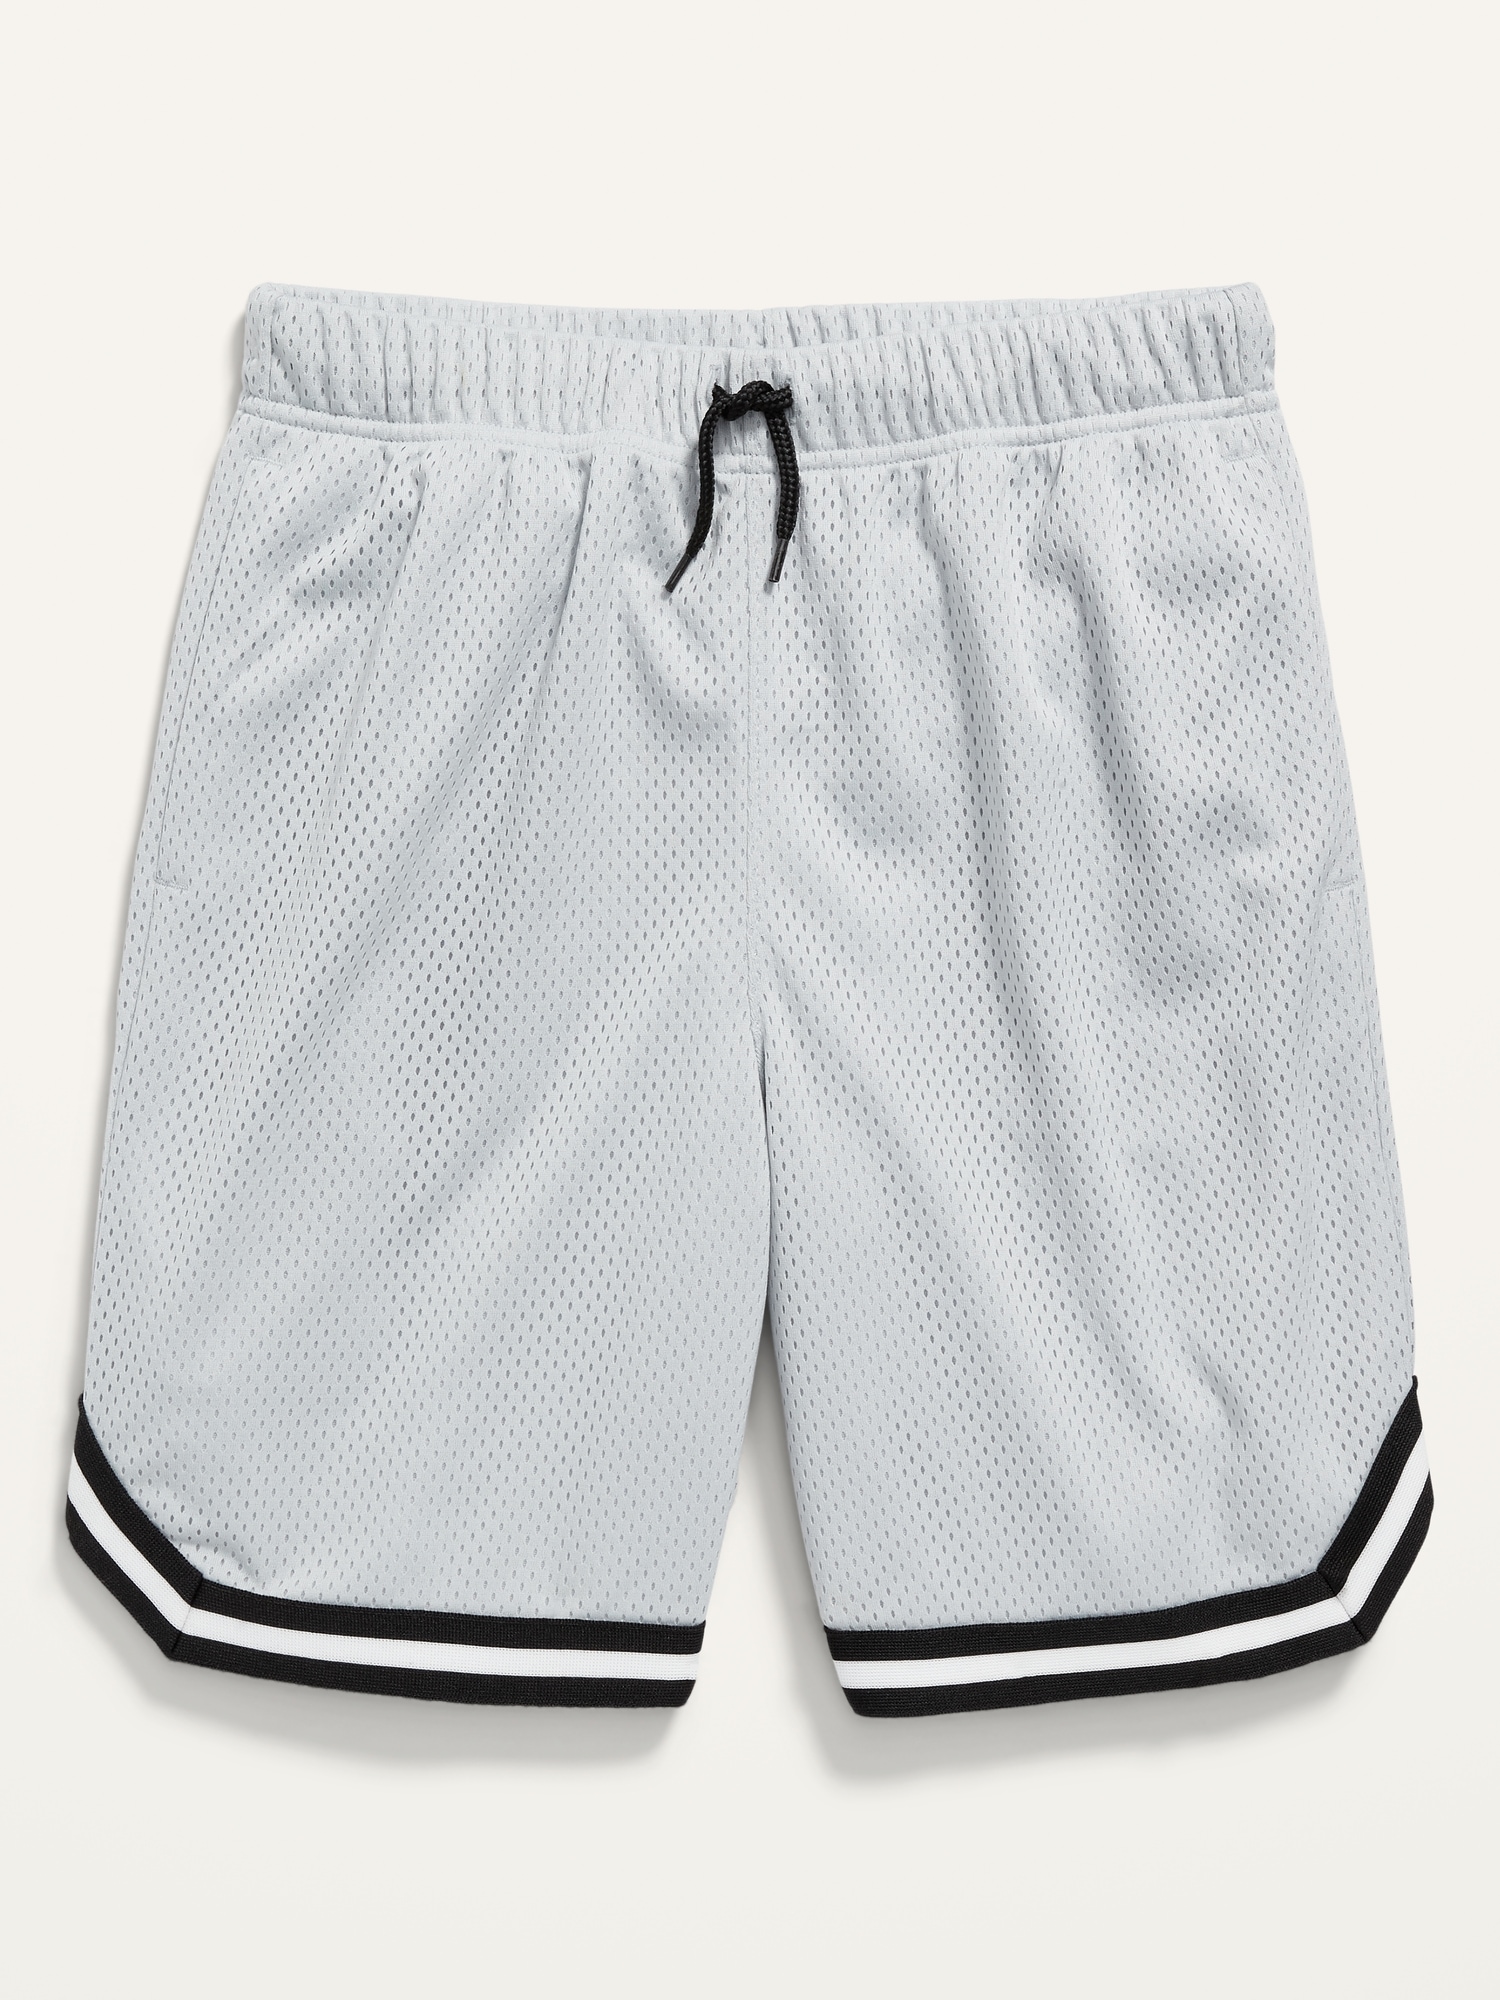 Old Navy Mesh Basketball Shorts for Boys (At Knee) gray. 1